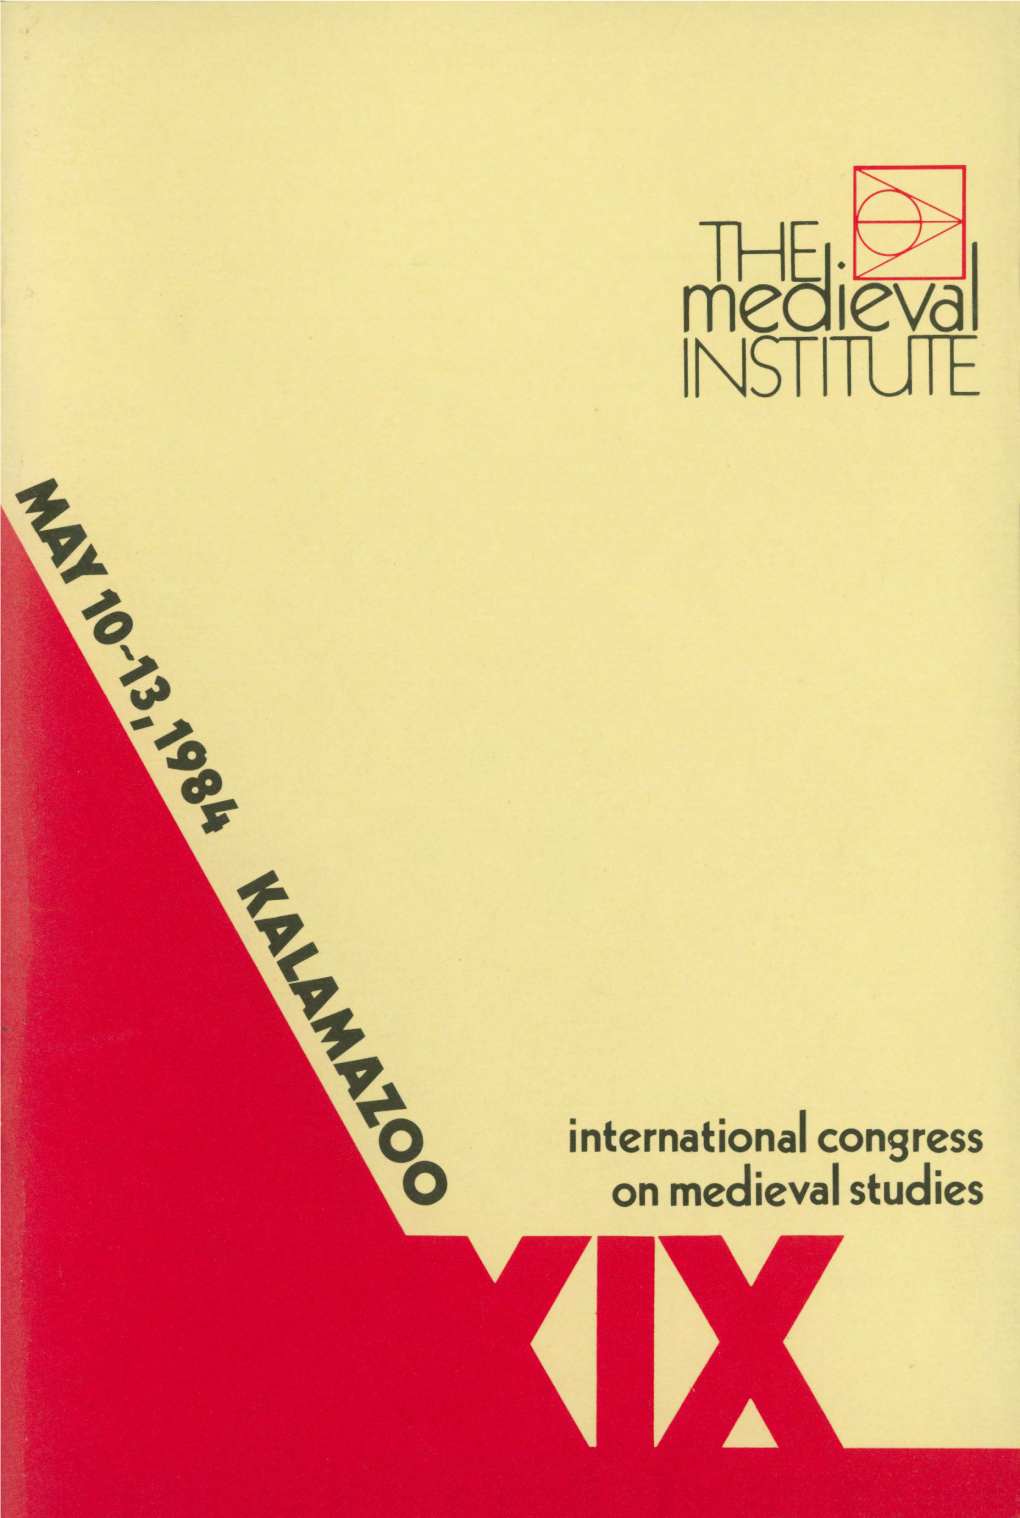 19Th International Congress on Medieval Studies